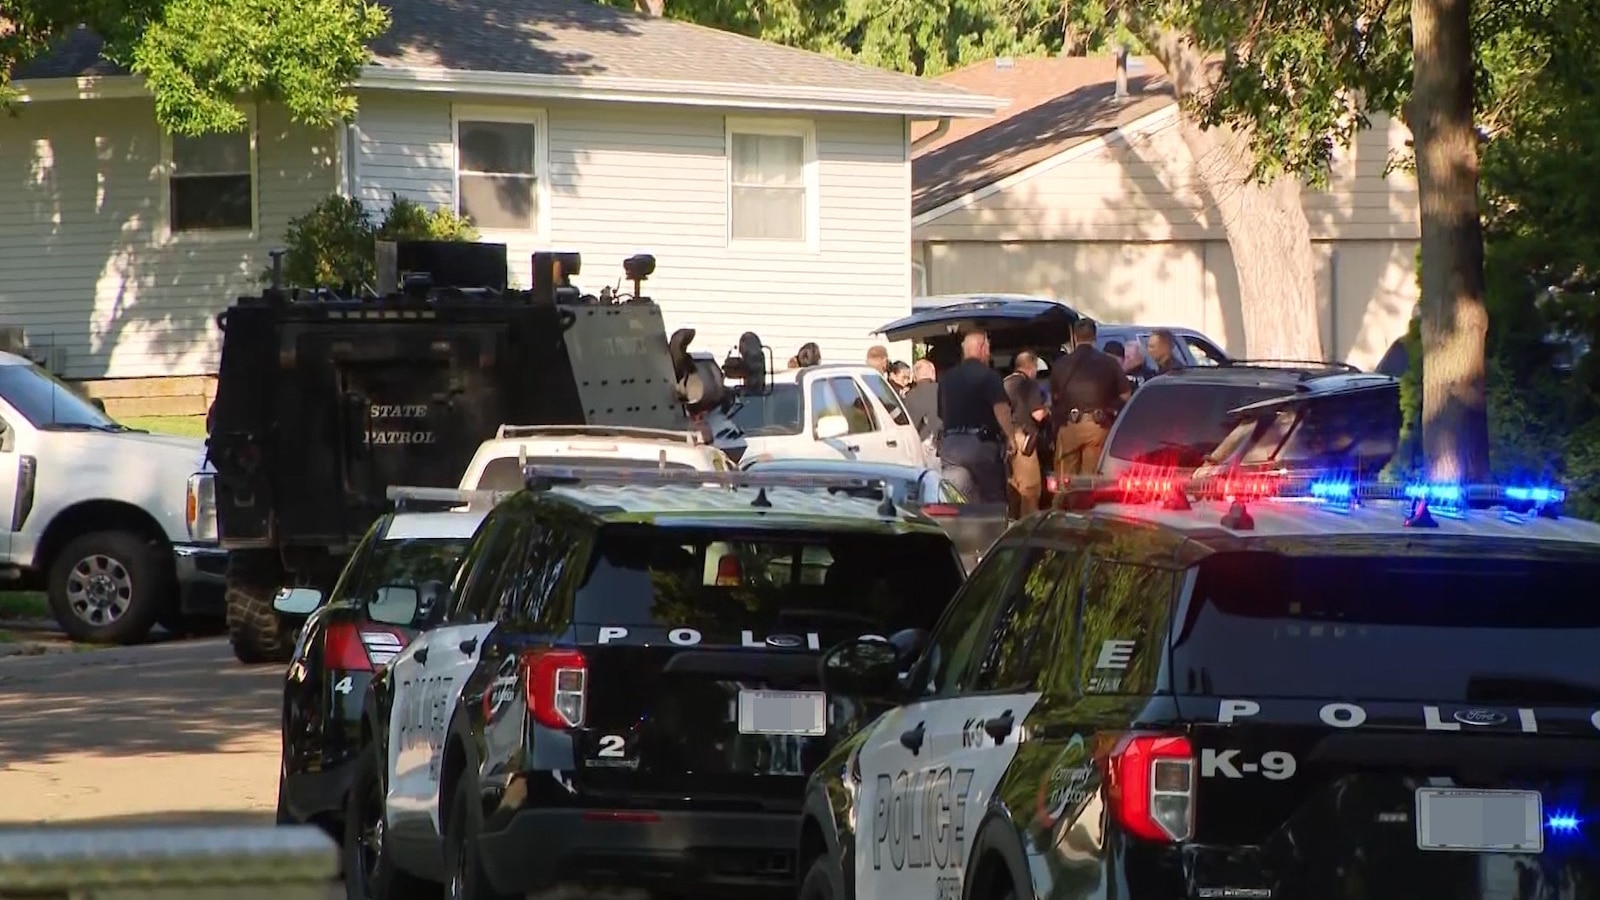 3 children, 3 adults shot inside home: Police